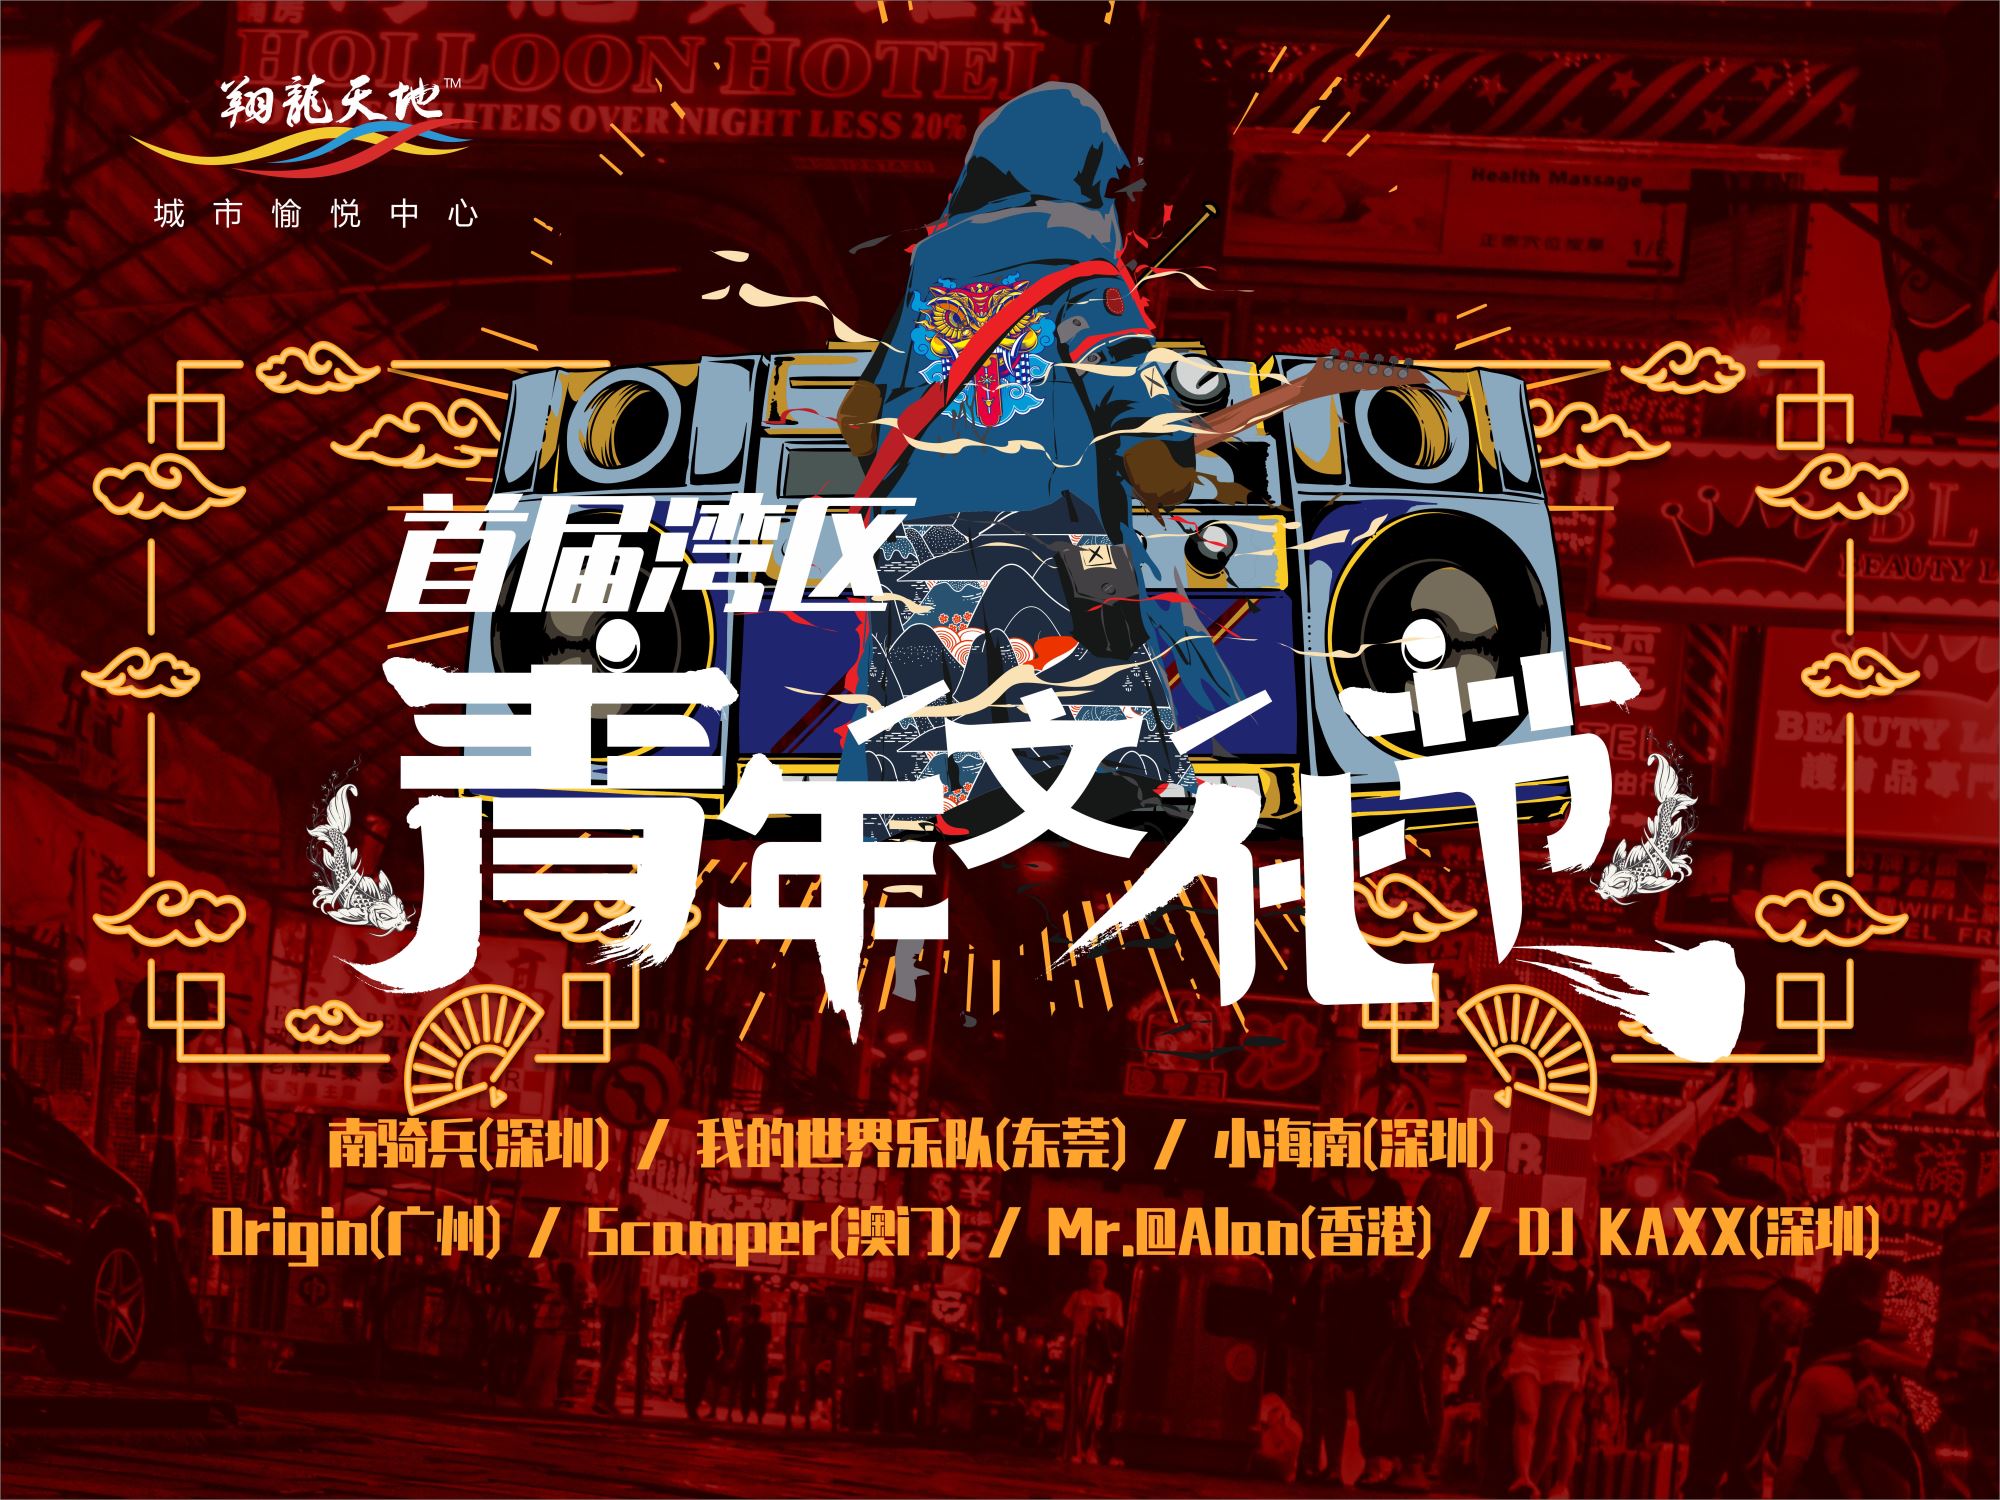 BLOX+人文艺术 翔龙天地MALL“首届湾区青年文化节”成功举办